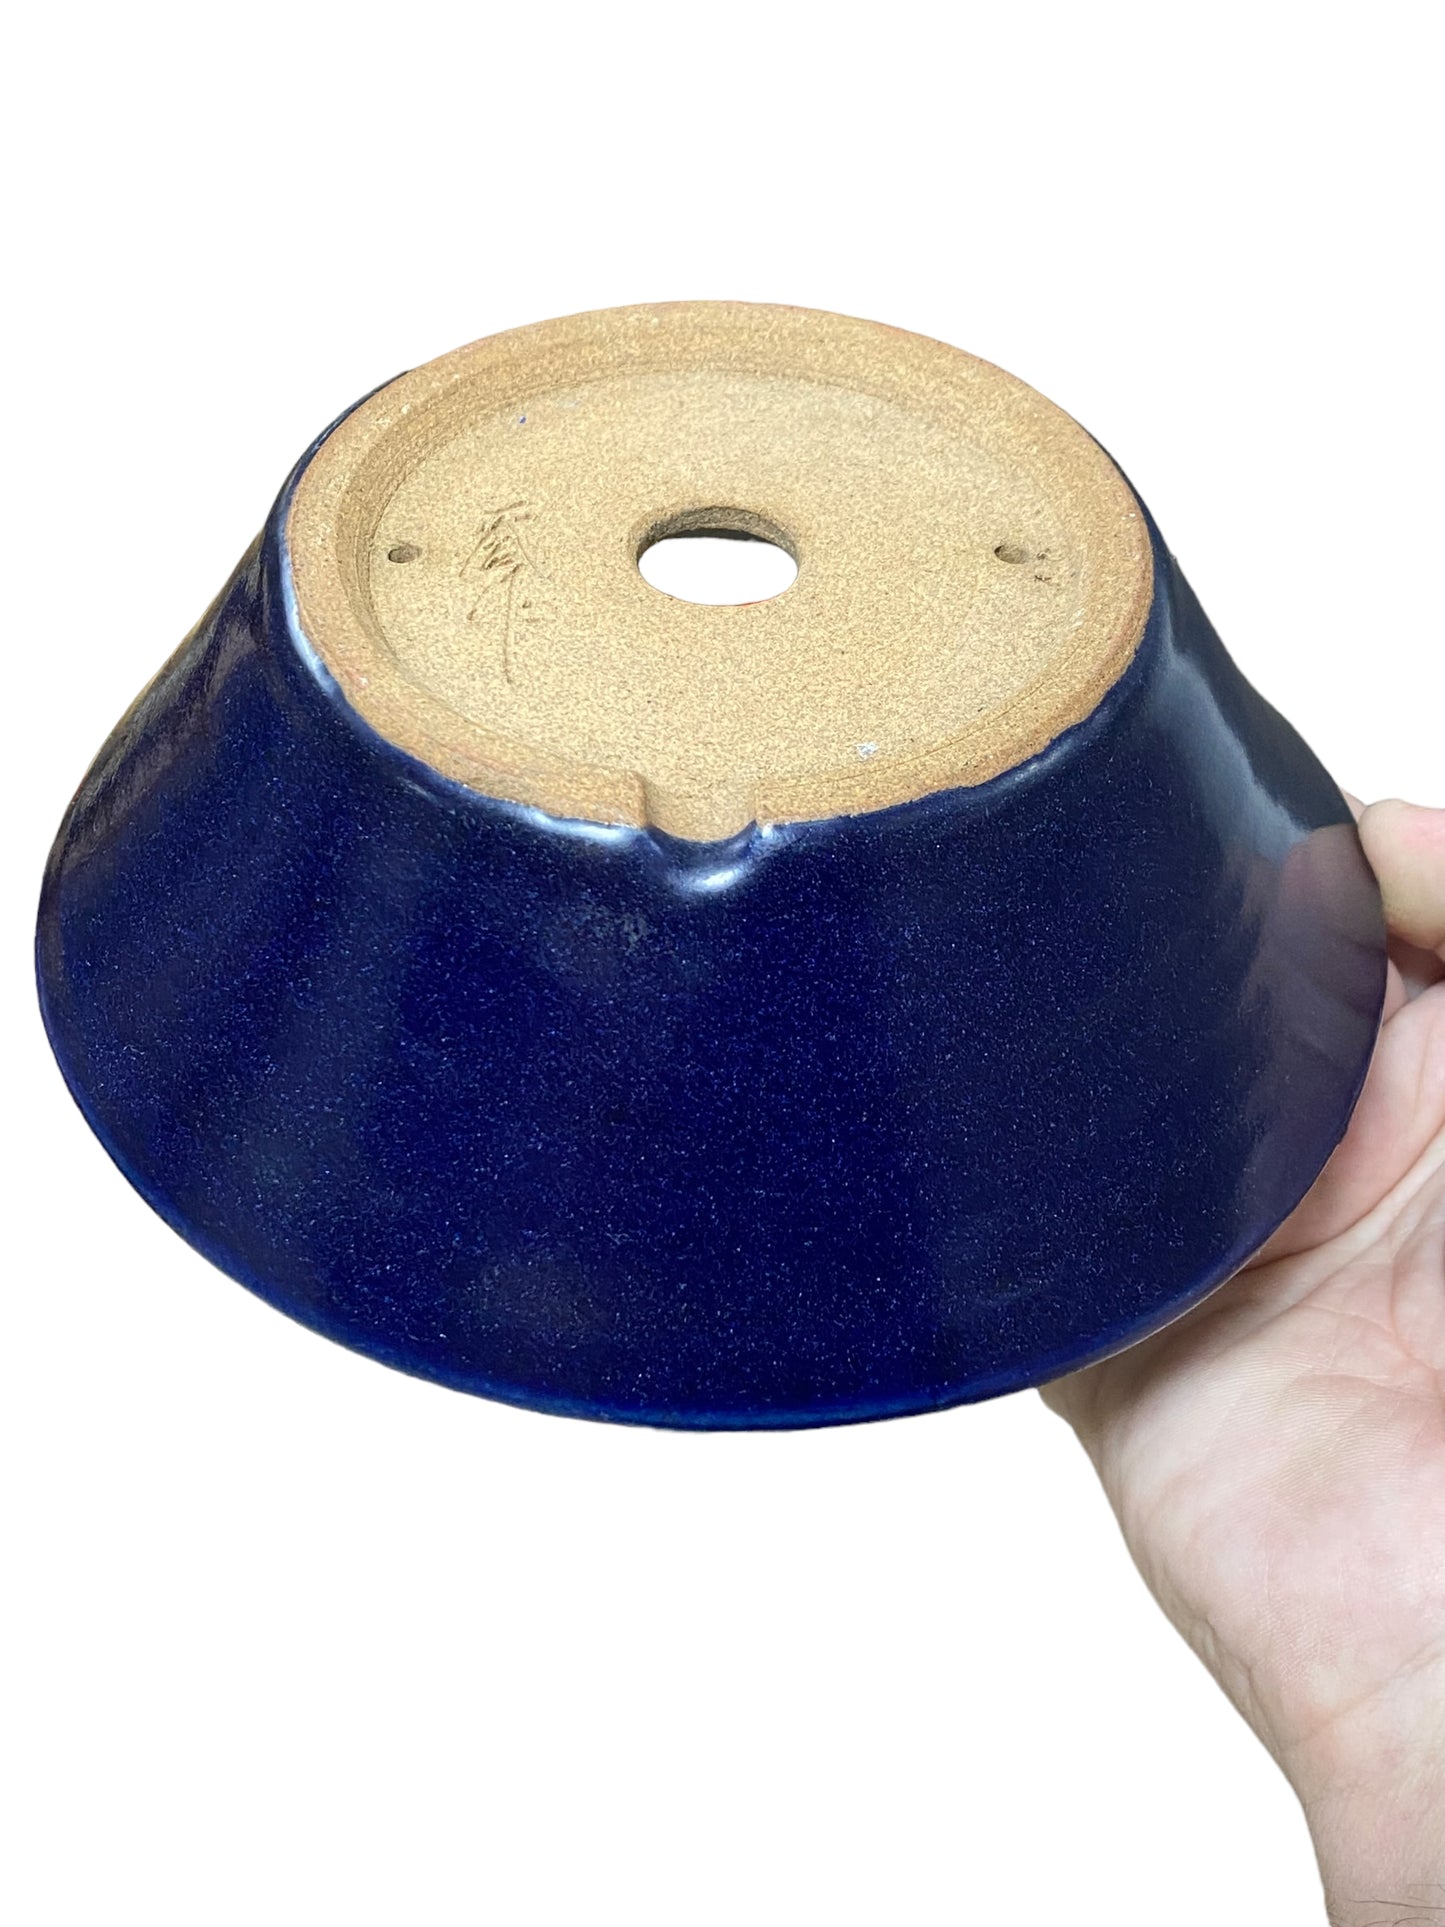 Isso - Ruri Blue Glazed Bowl Bonsai or Accent Pot